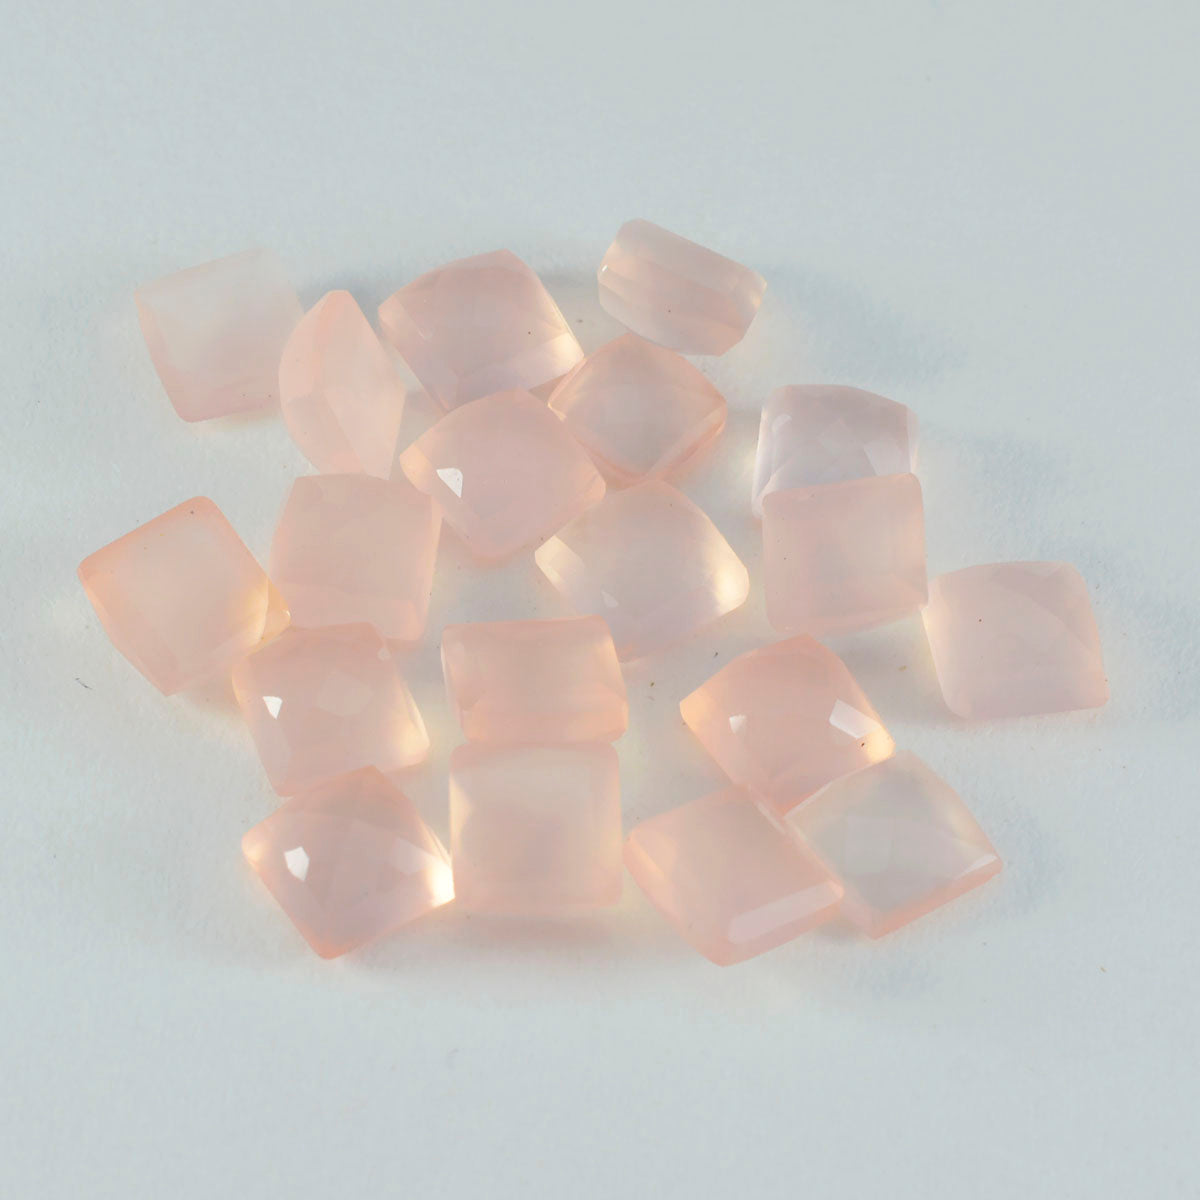 Riyogems 1PC roze rozenkwarts gefacetteerd 7x7 mm vierkante vorm knappe kwaliteitsedelstenen